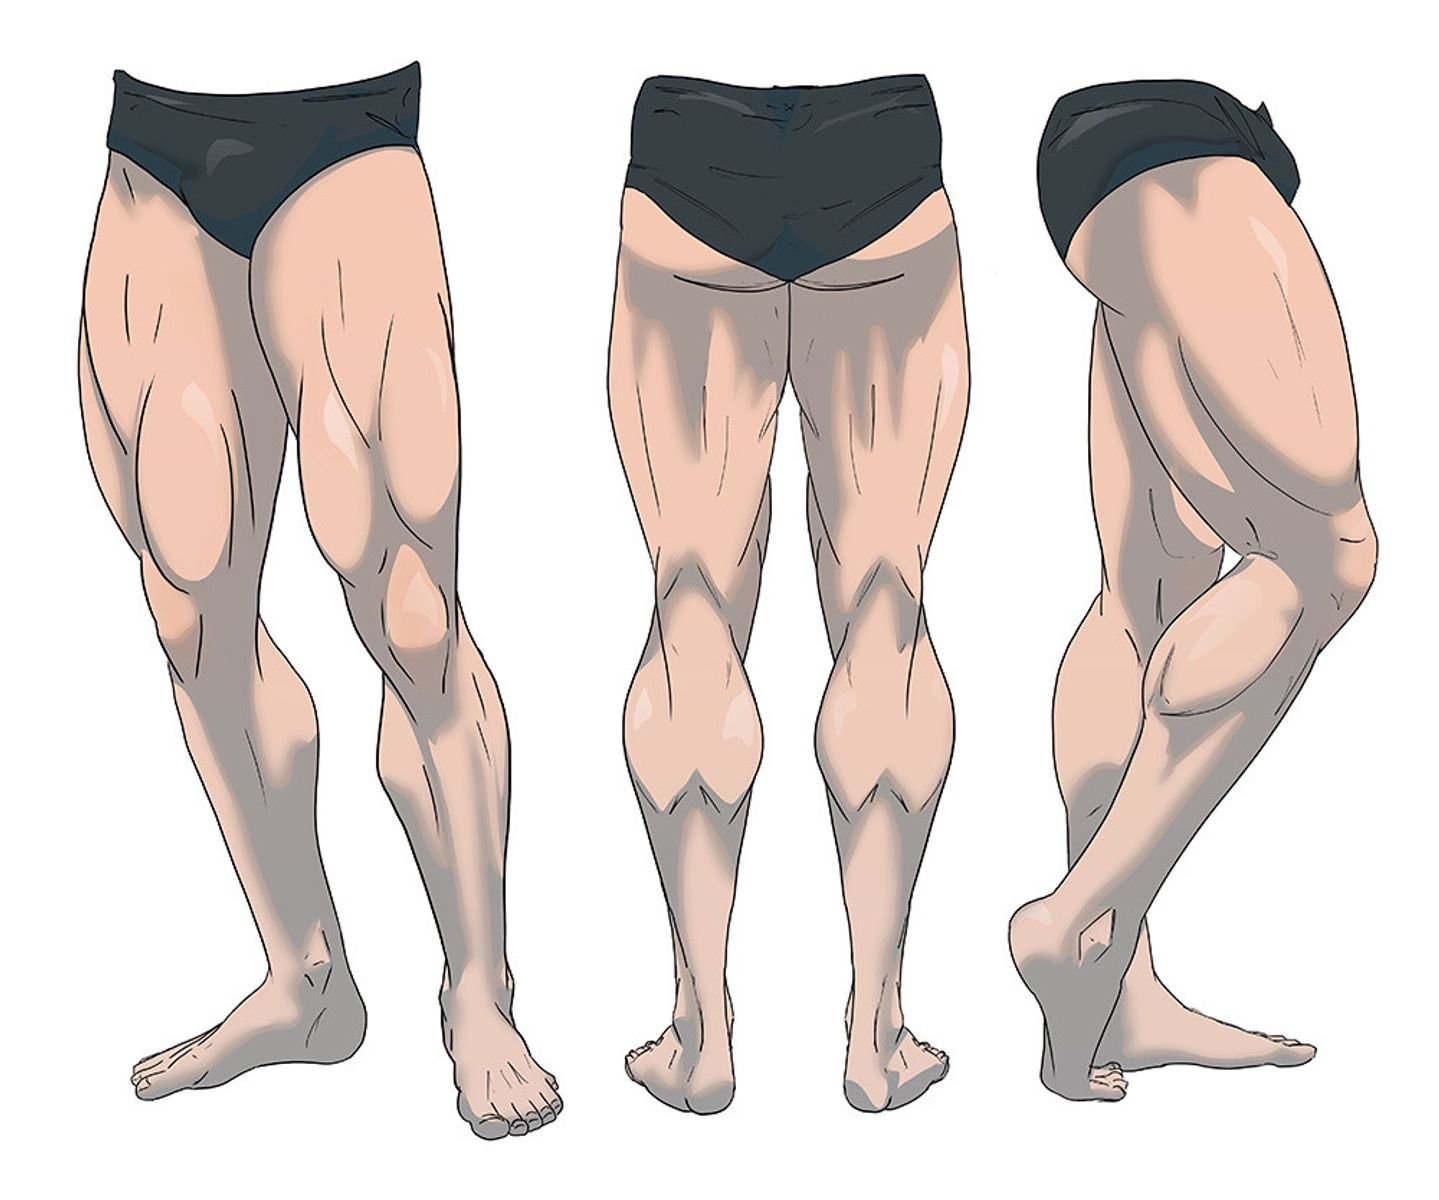 Legs comics. Ноги референс. Мышцы ног референс. Ноги мужские мышцы референс. Мужские ноги.